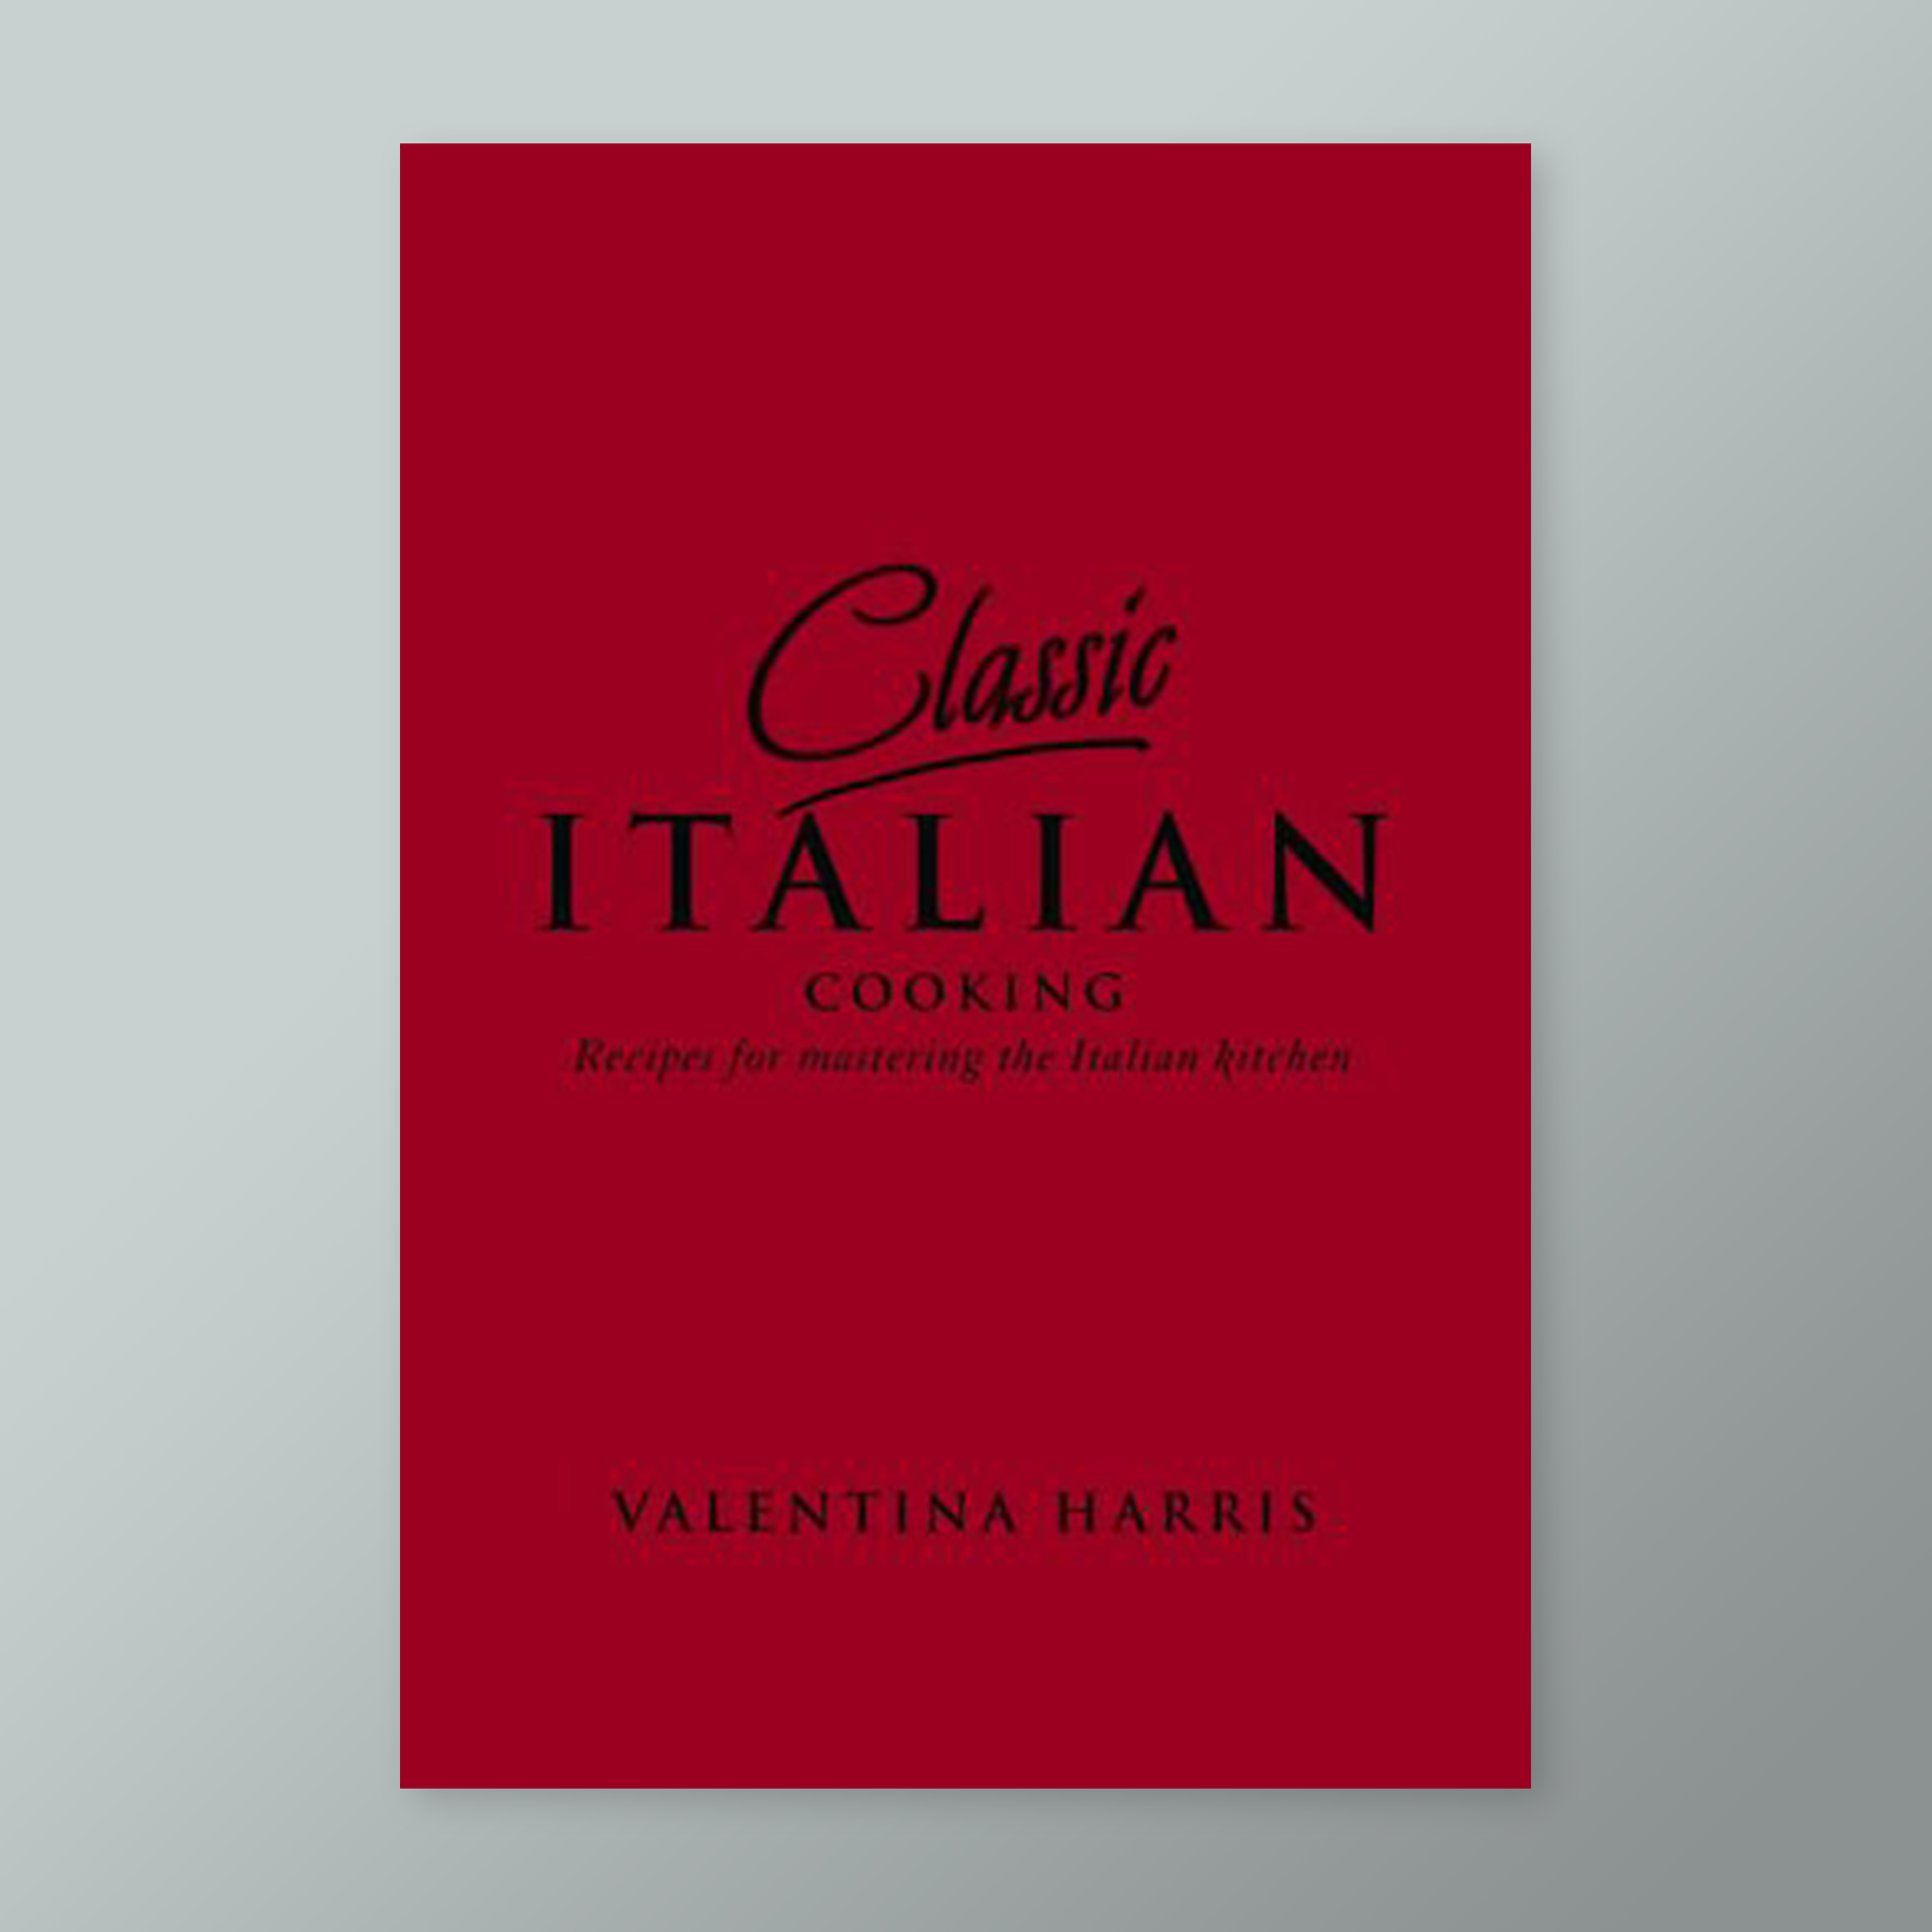 Classic Italian Cooking cookbook cover